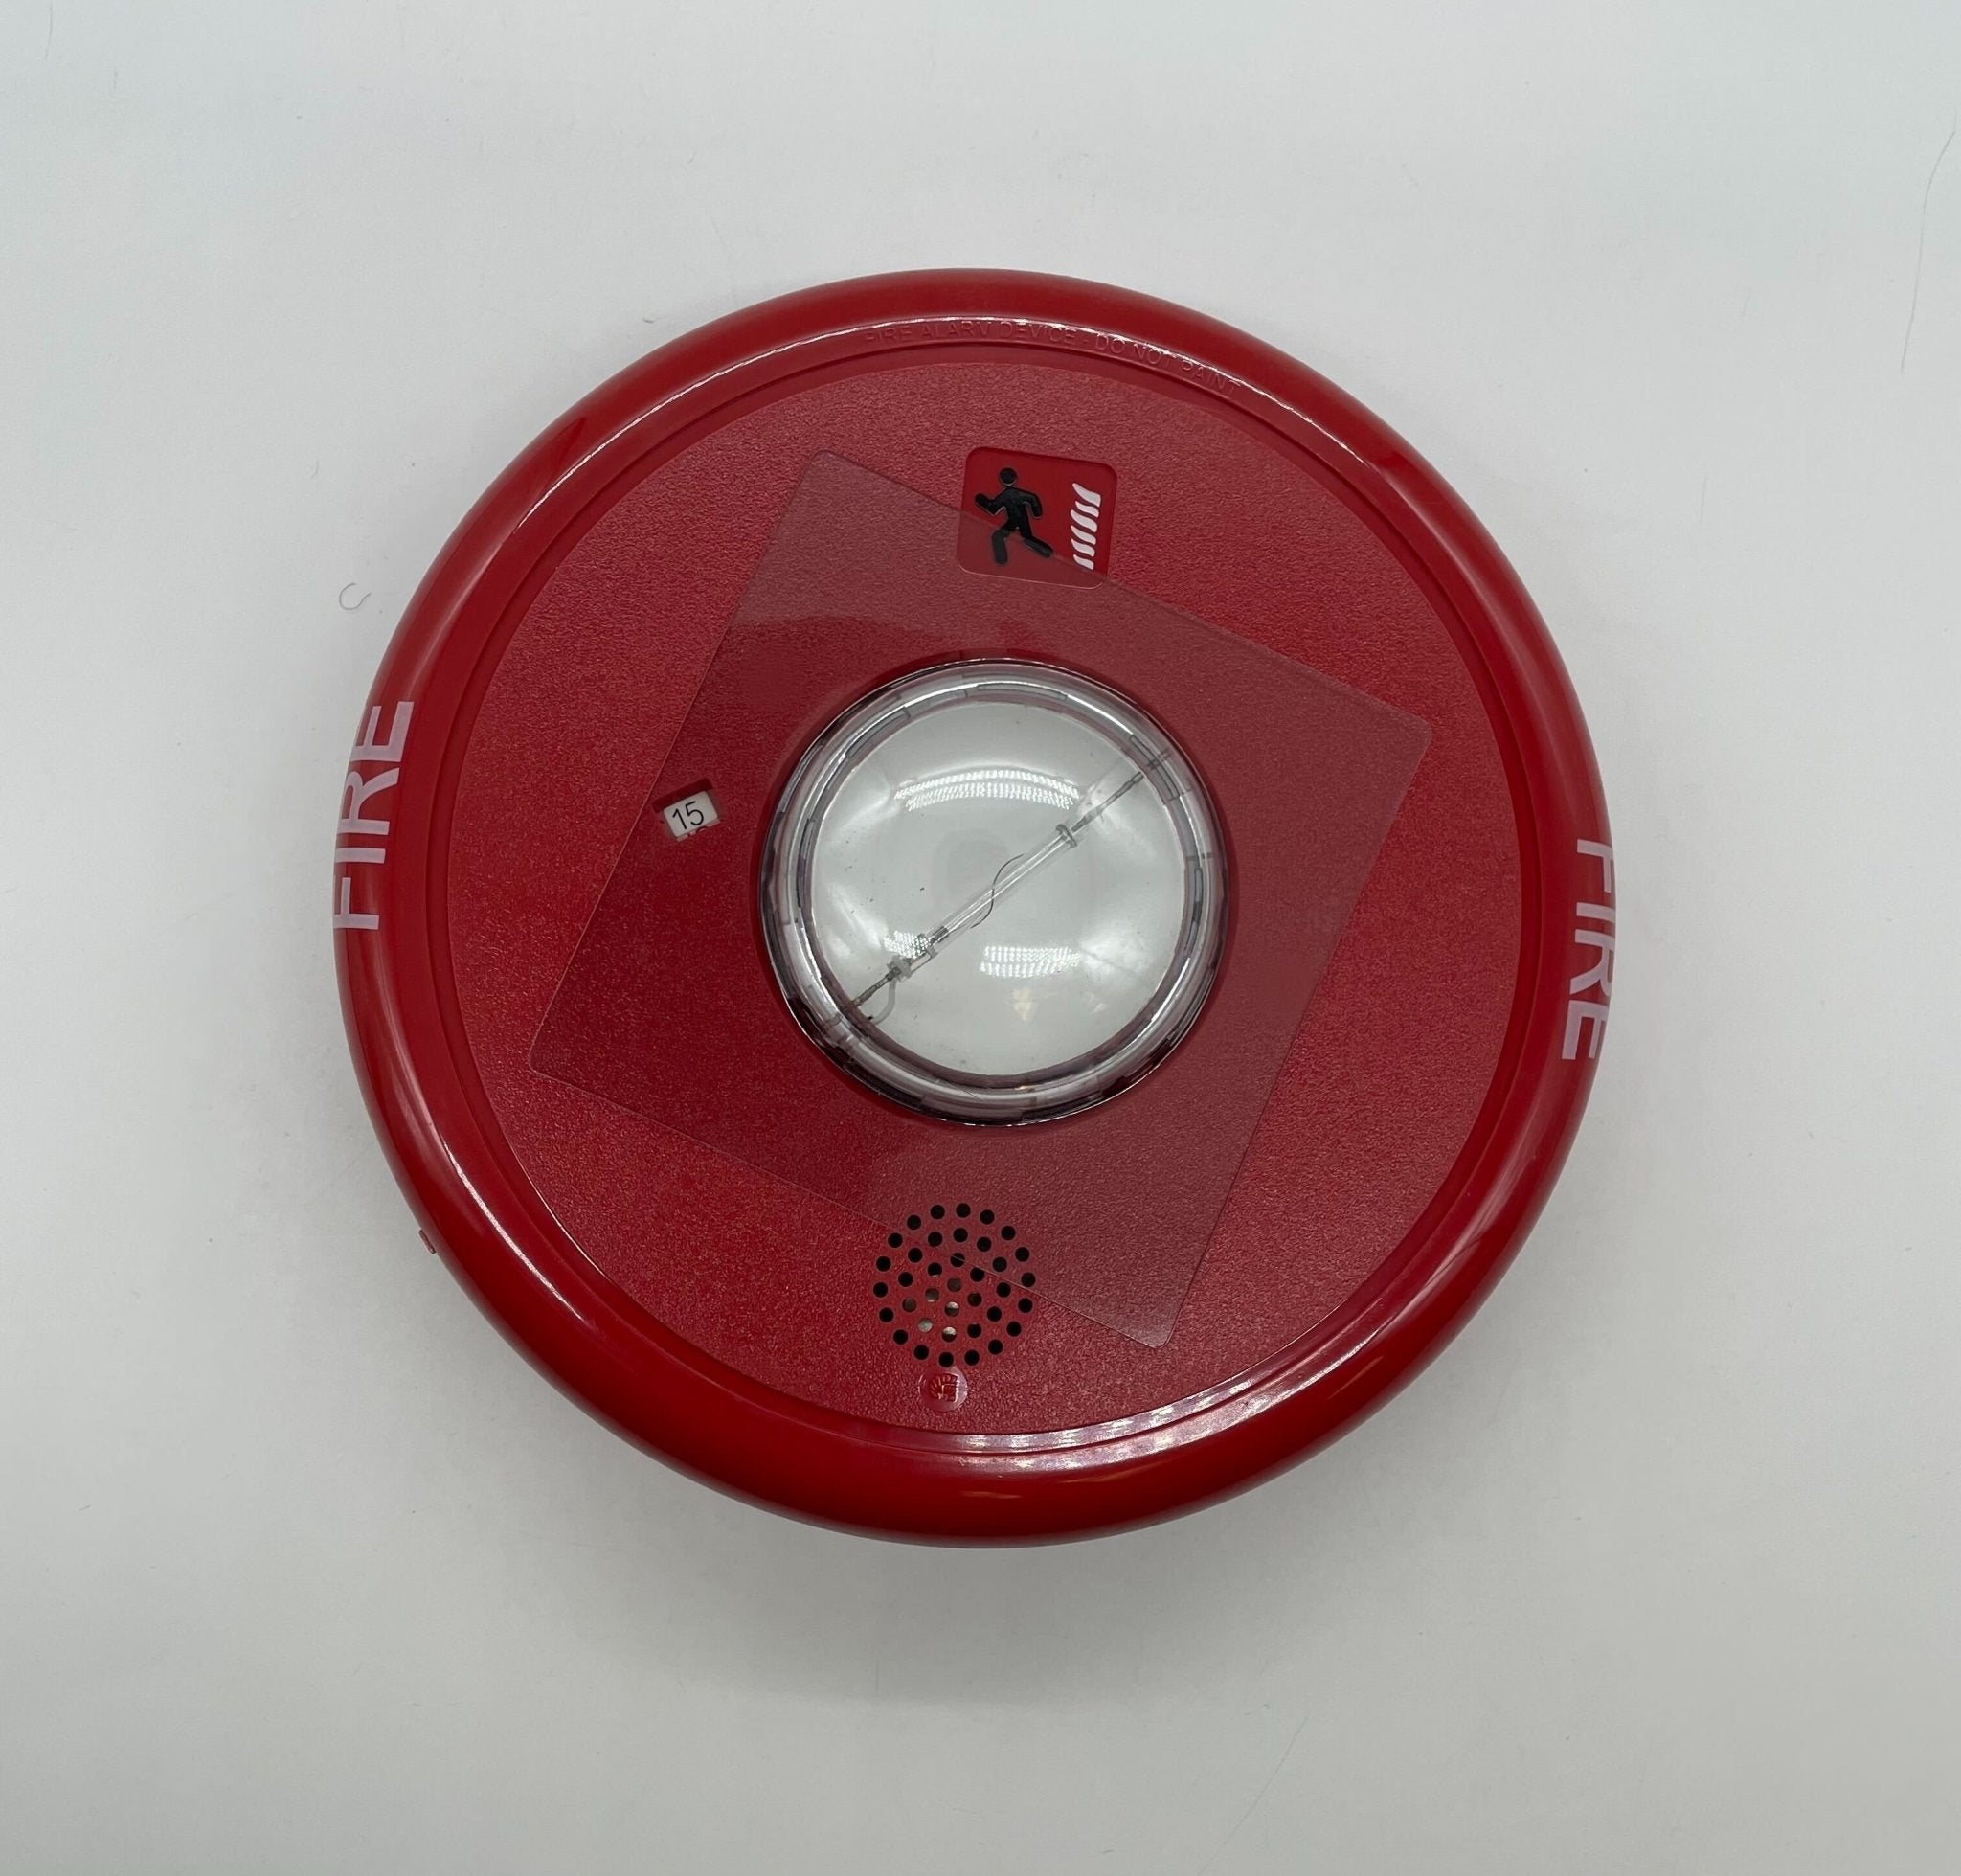 Edwards GCFR-HDVM - The Fire Alarm Supplier